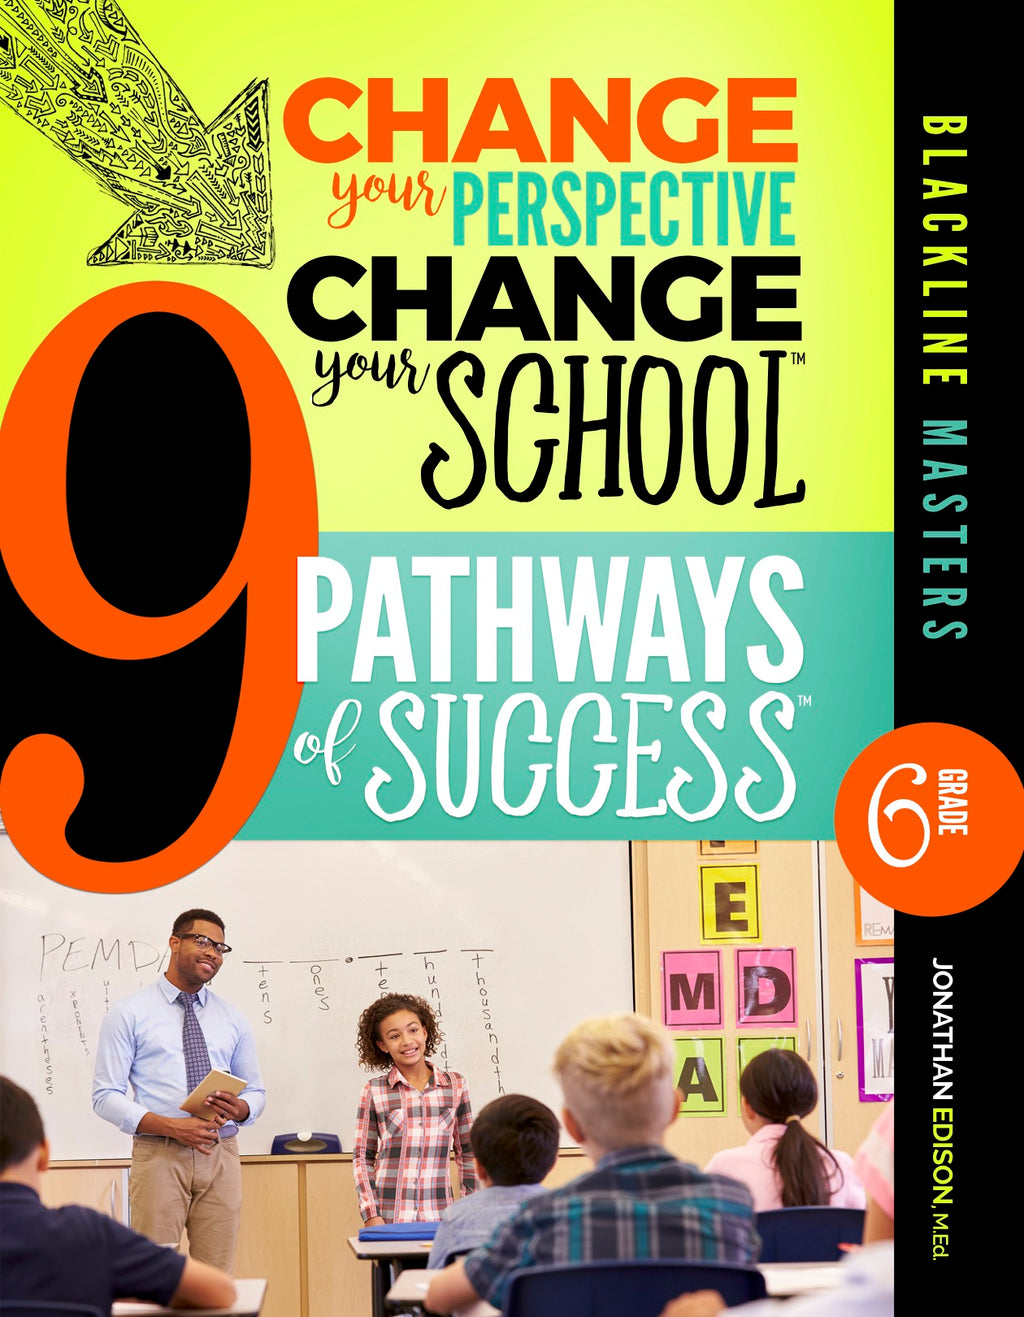 9 Pathways of Success-6th Grade